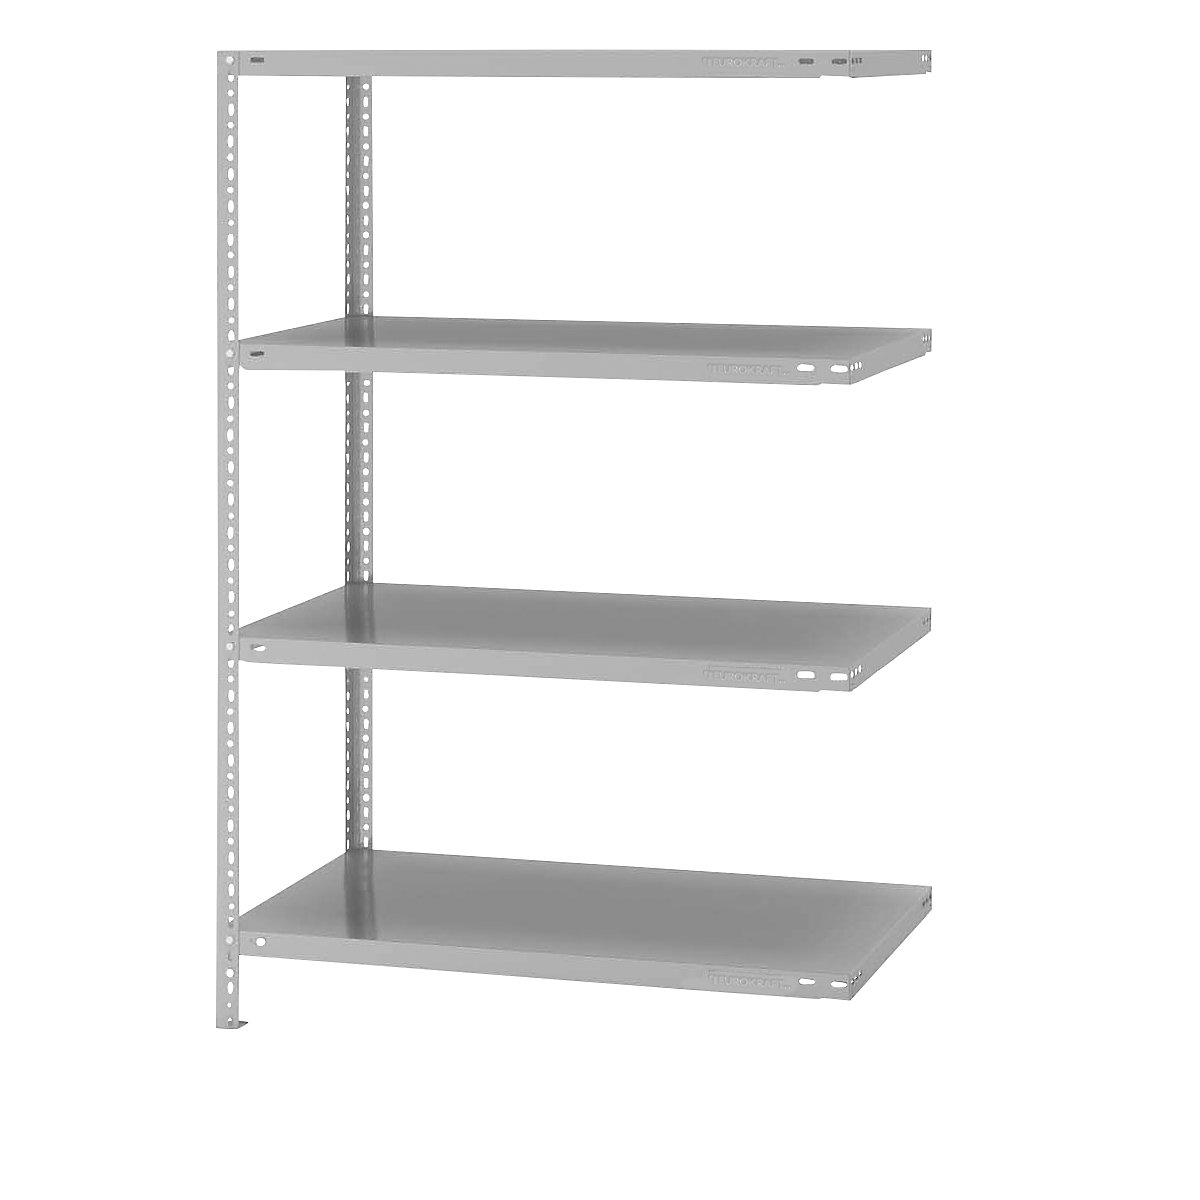 Bolt-together storage shelving, RAL 7035, medium duty – eurokraft pro, shelf unit height 1500 mm, shelf width 1000 mm, depth 600 mm, extension shelf unit-5